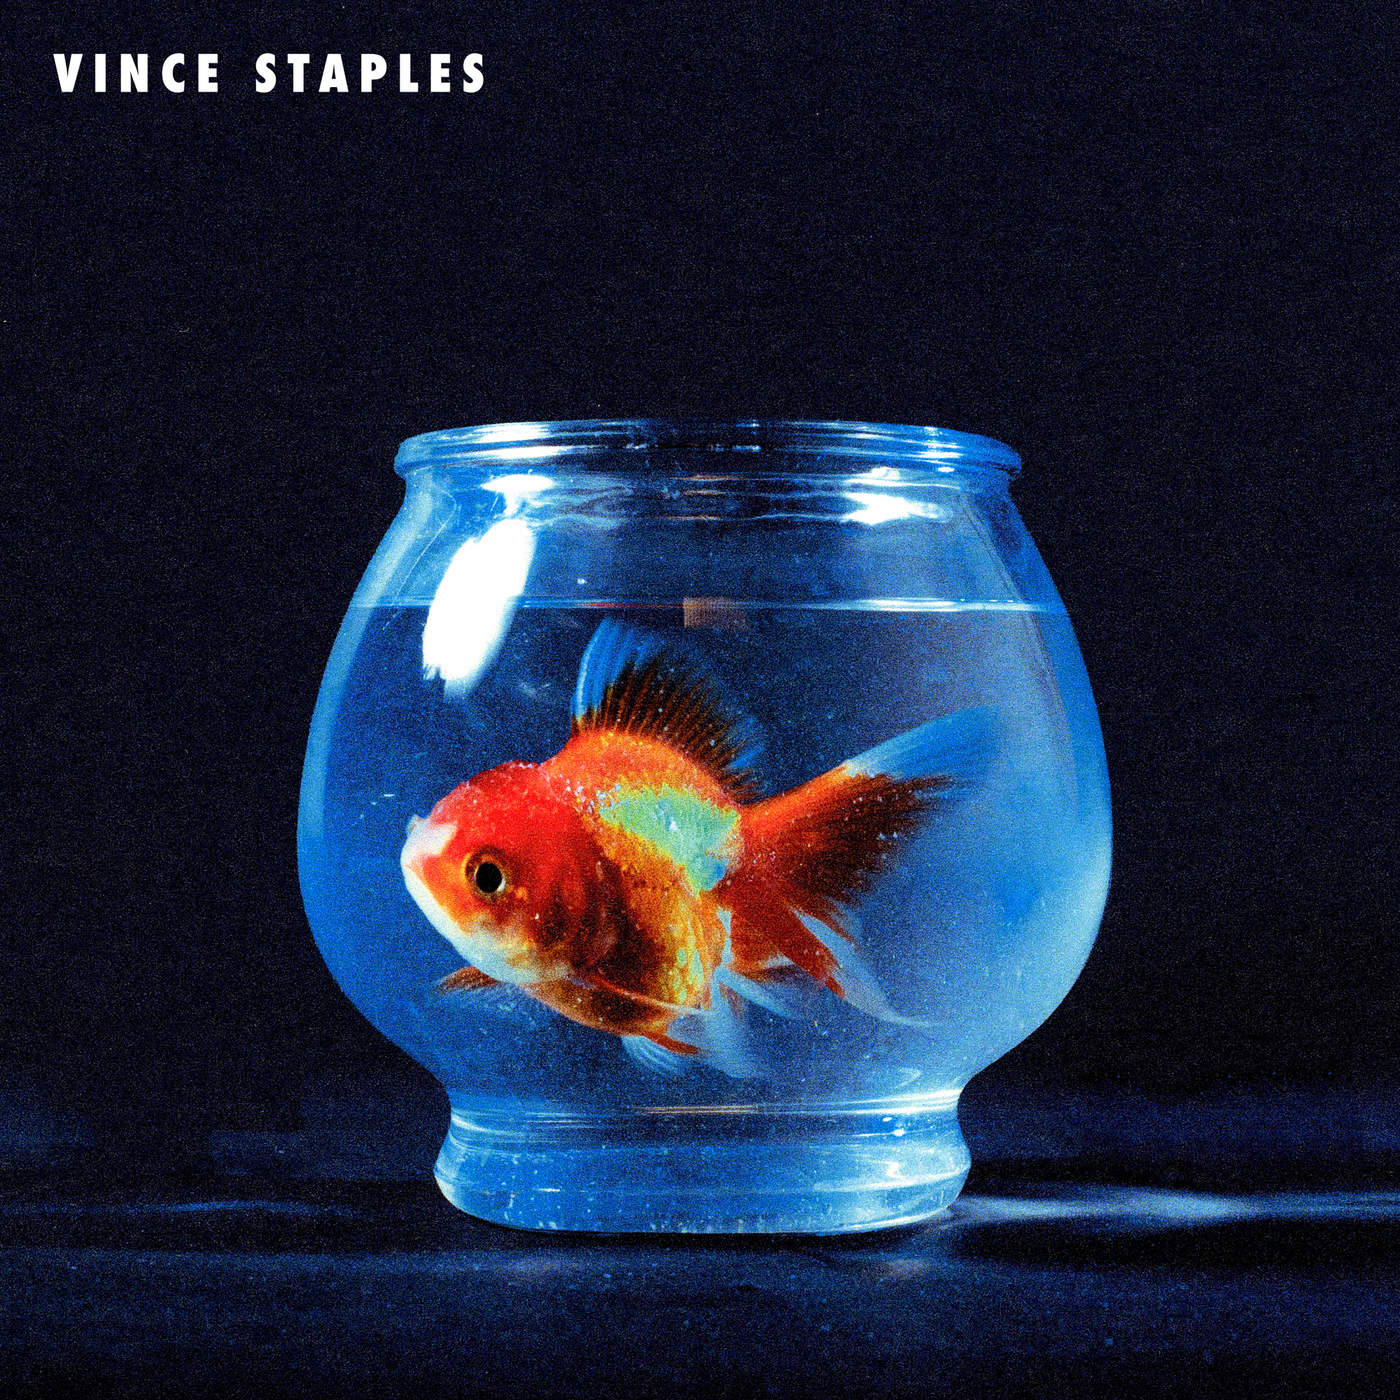 VINCE STAPLES - BIG FISH THEORY [TRACKLIST]